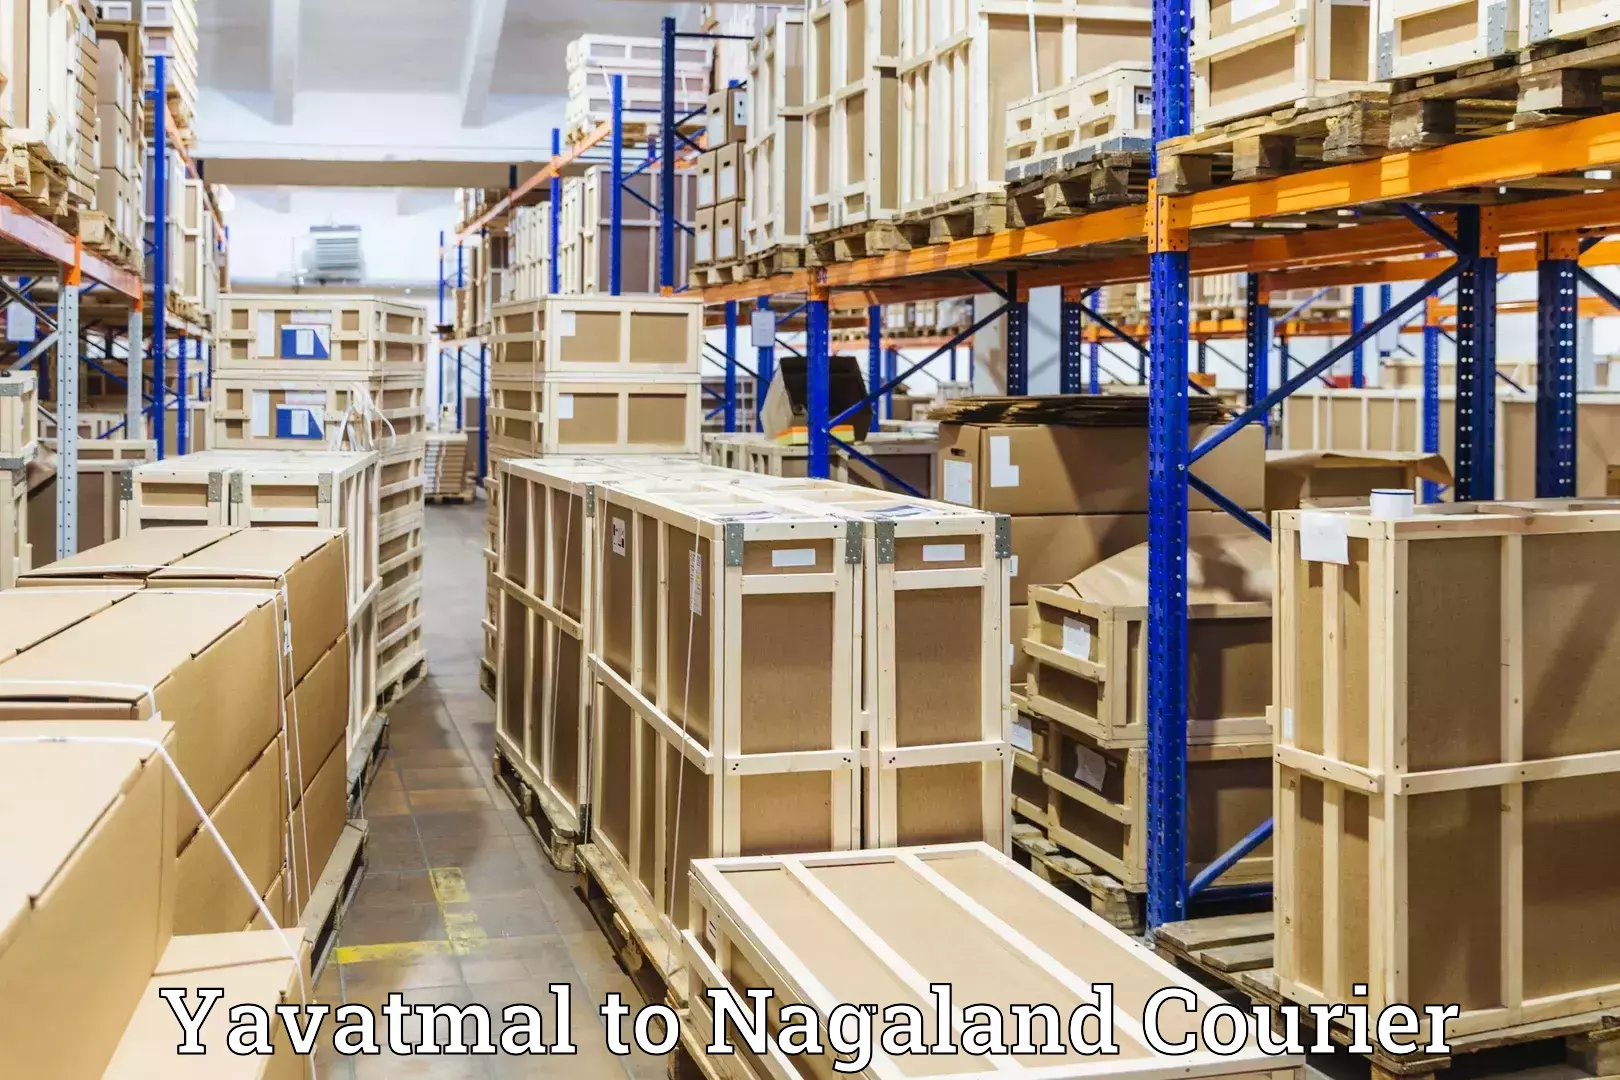 Luggage shipment specialists Yavatmal to Nagaland